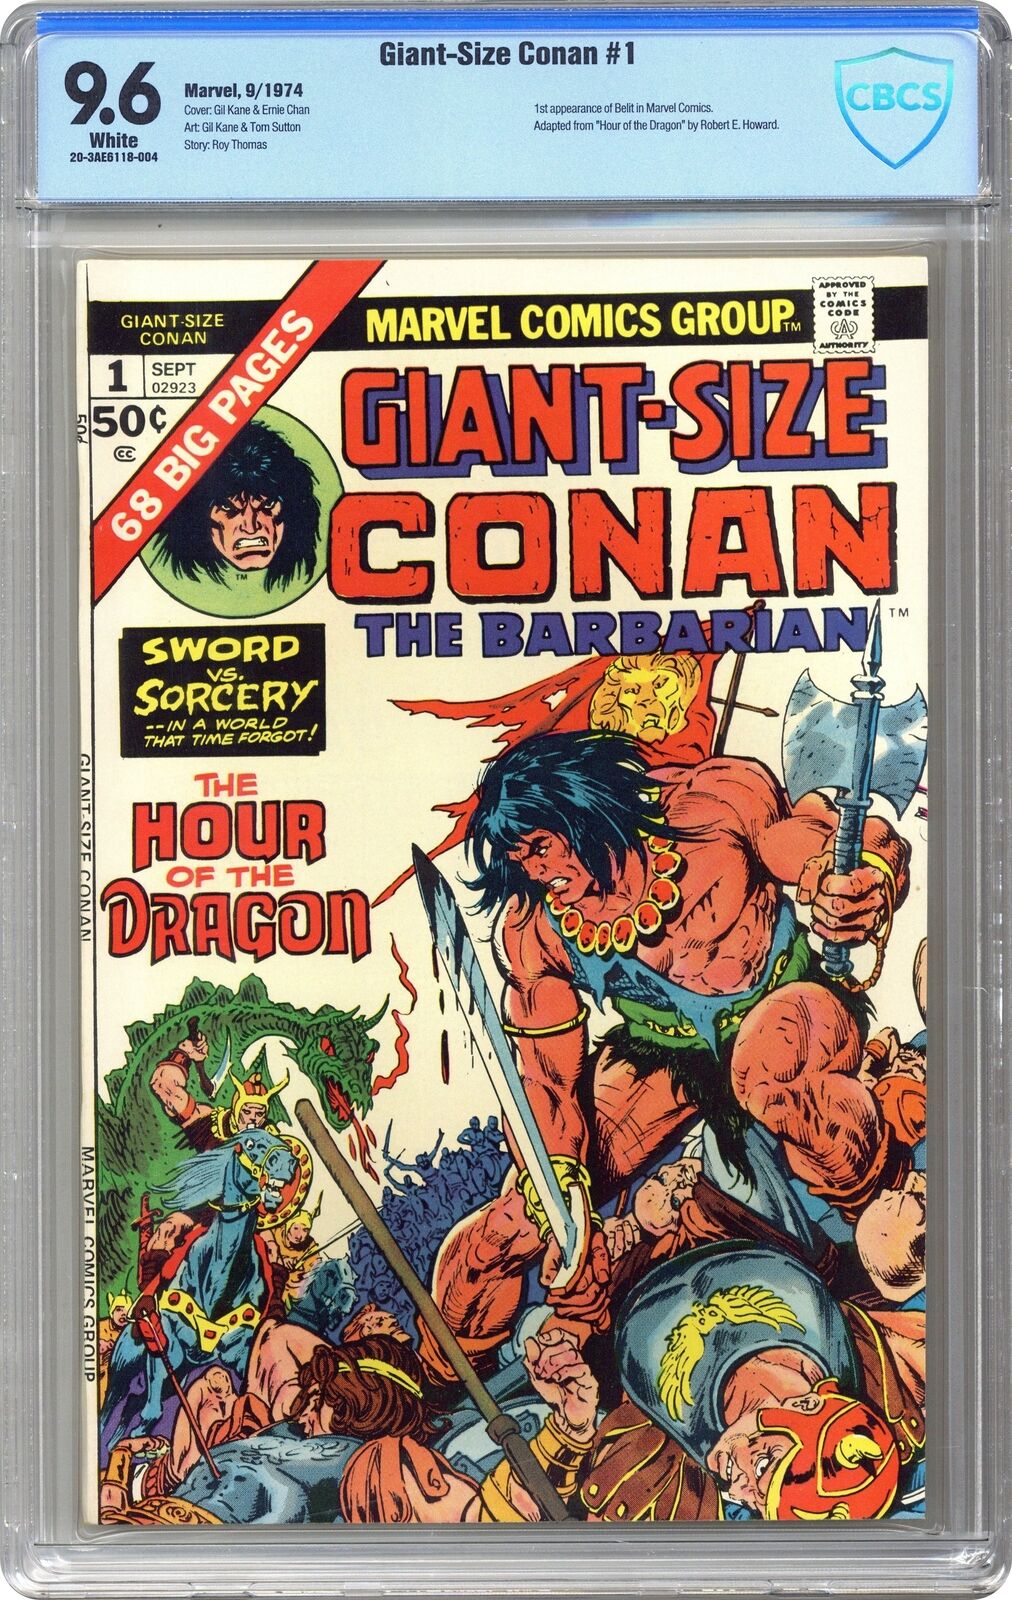 Giant Size Conan #1 CBCS 9.6 1974 20-3AE6118-004